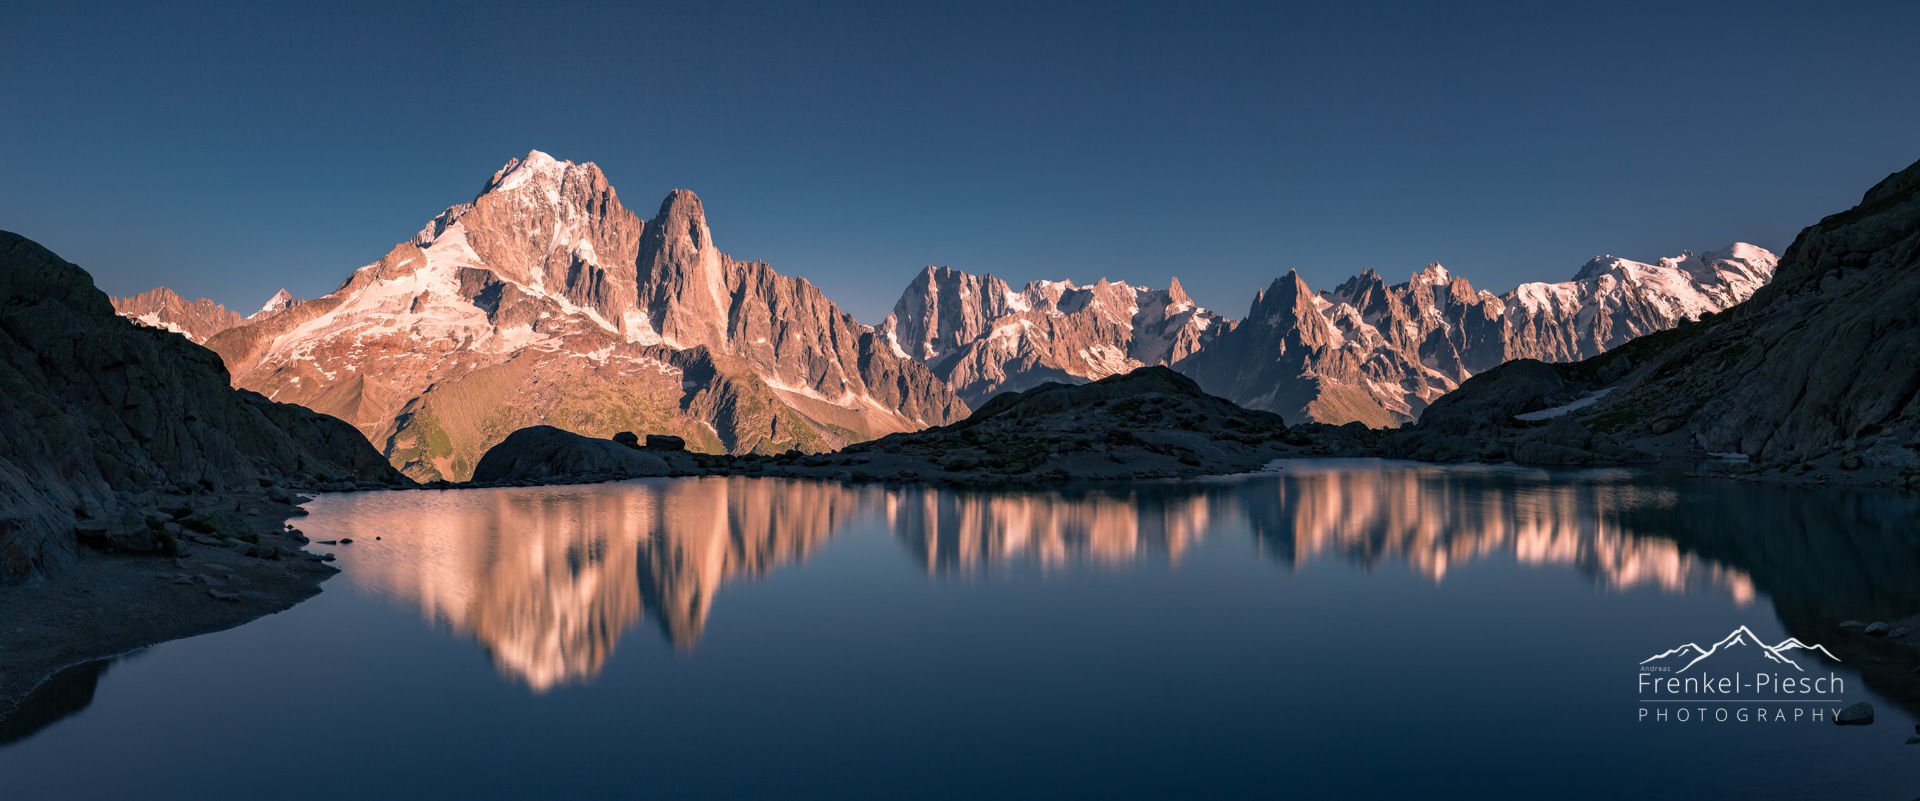 Mt. Blanc Massiv I Andreas Frenkel-Piesch Photography